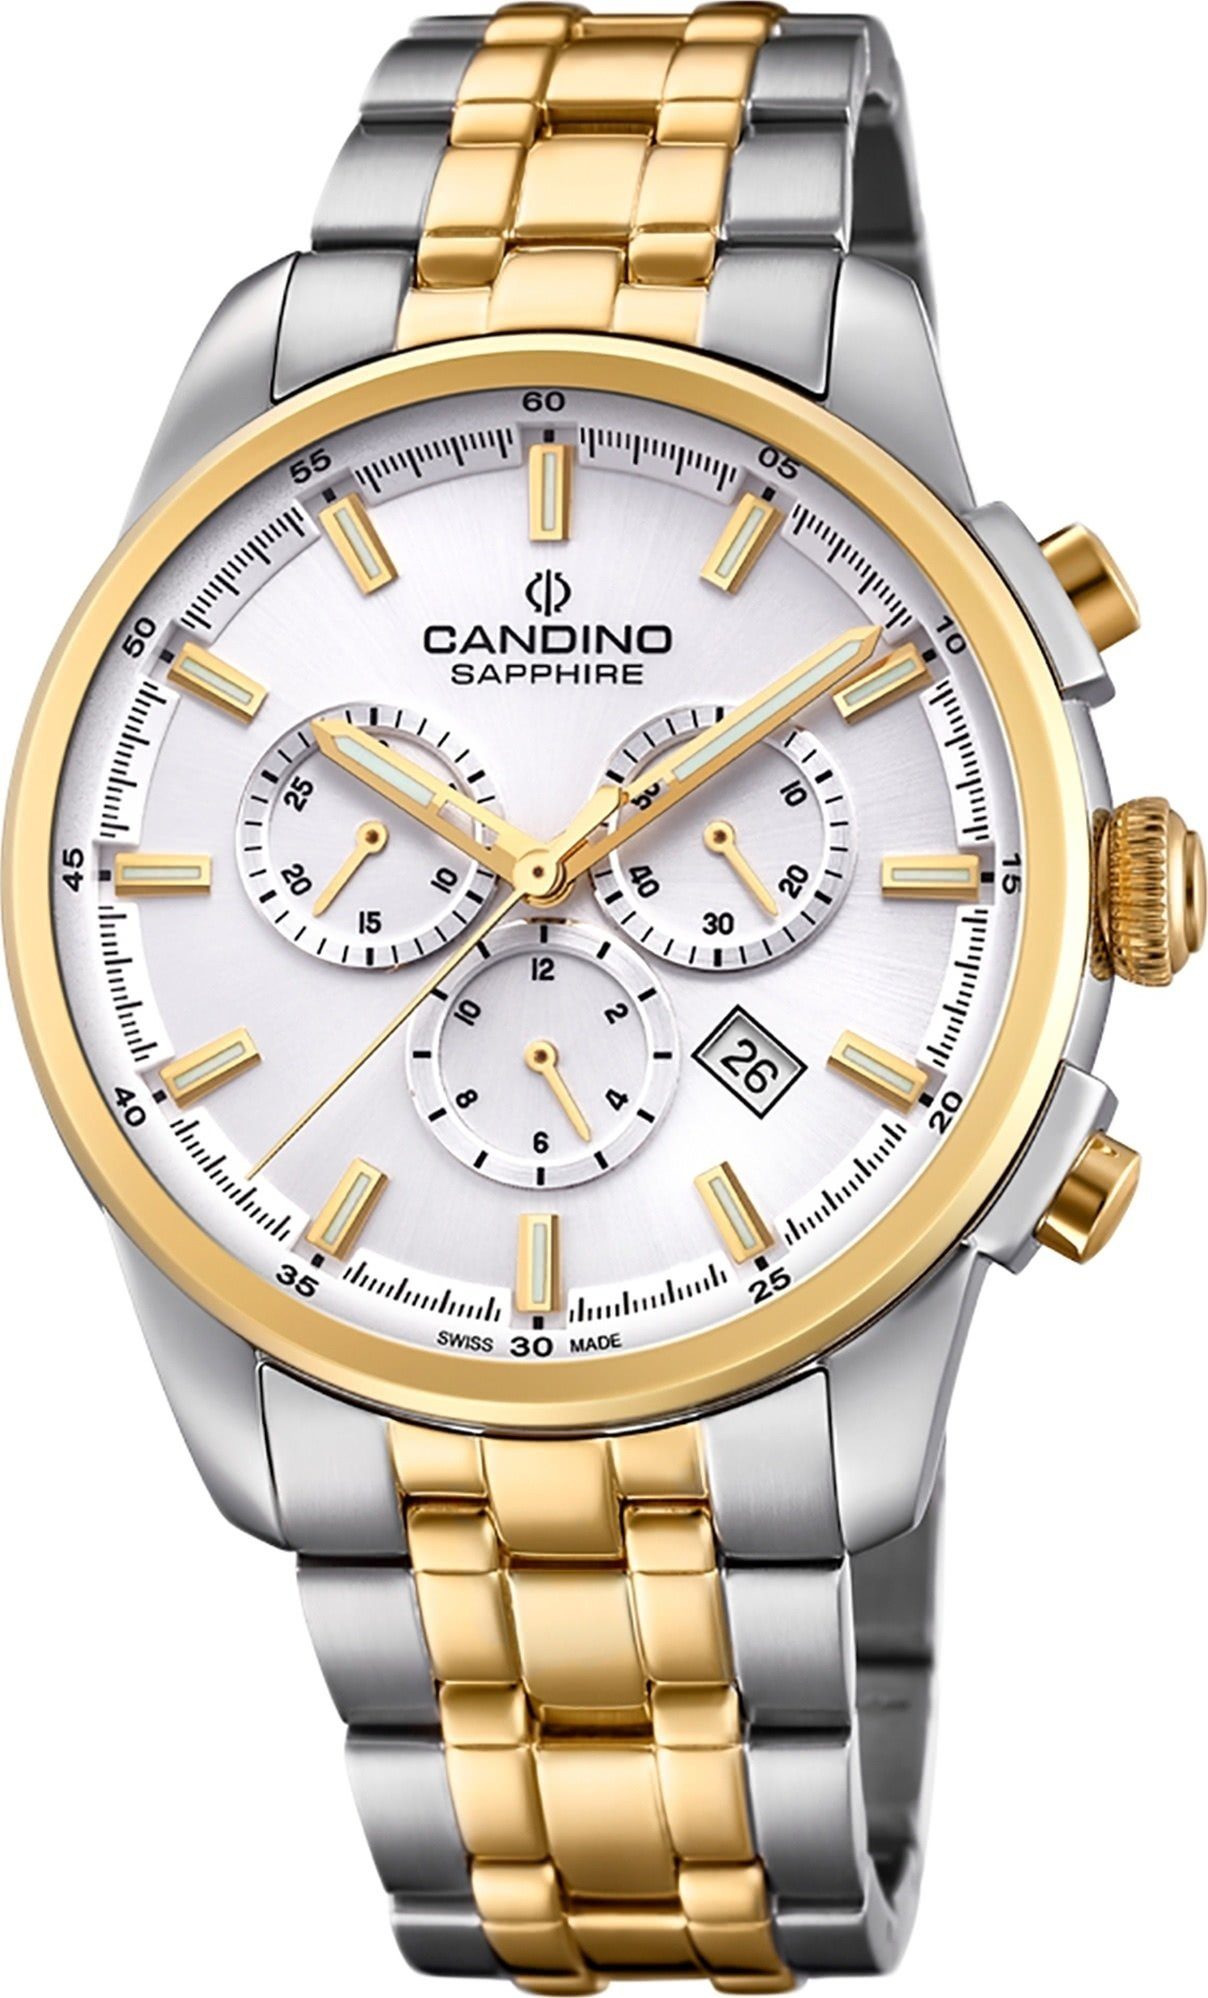 Uhr Armbanduhr silber, Herren Candino Sport Quarzuhr gold, Candino rund, Analog Edelstahlarmband C4699/1, Herren